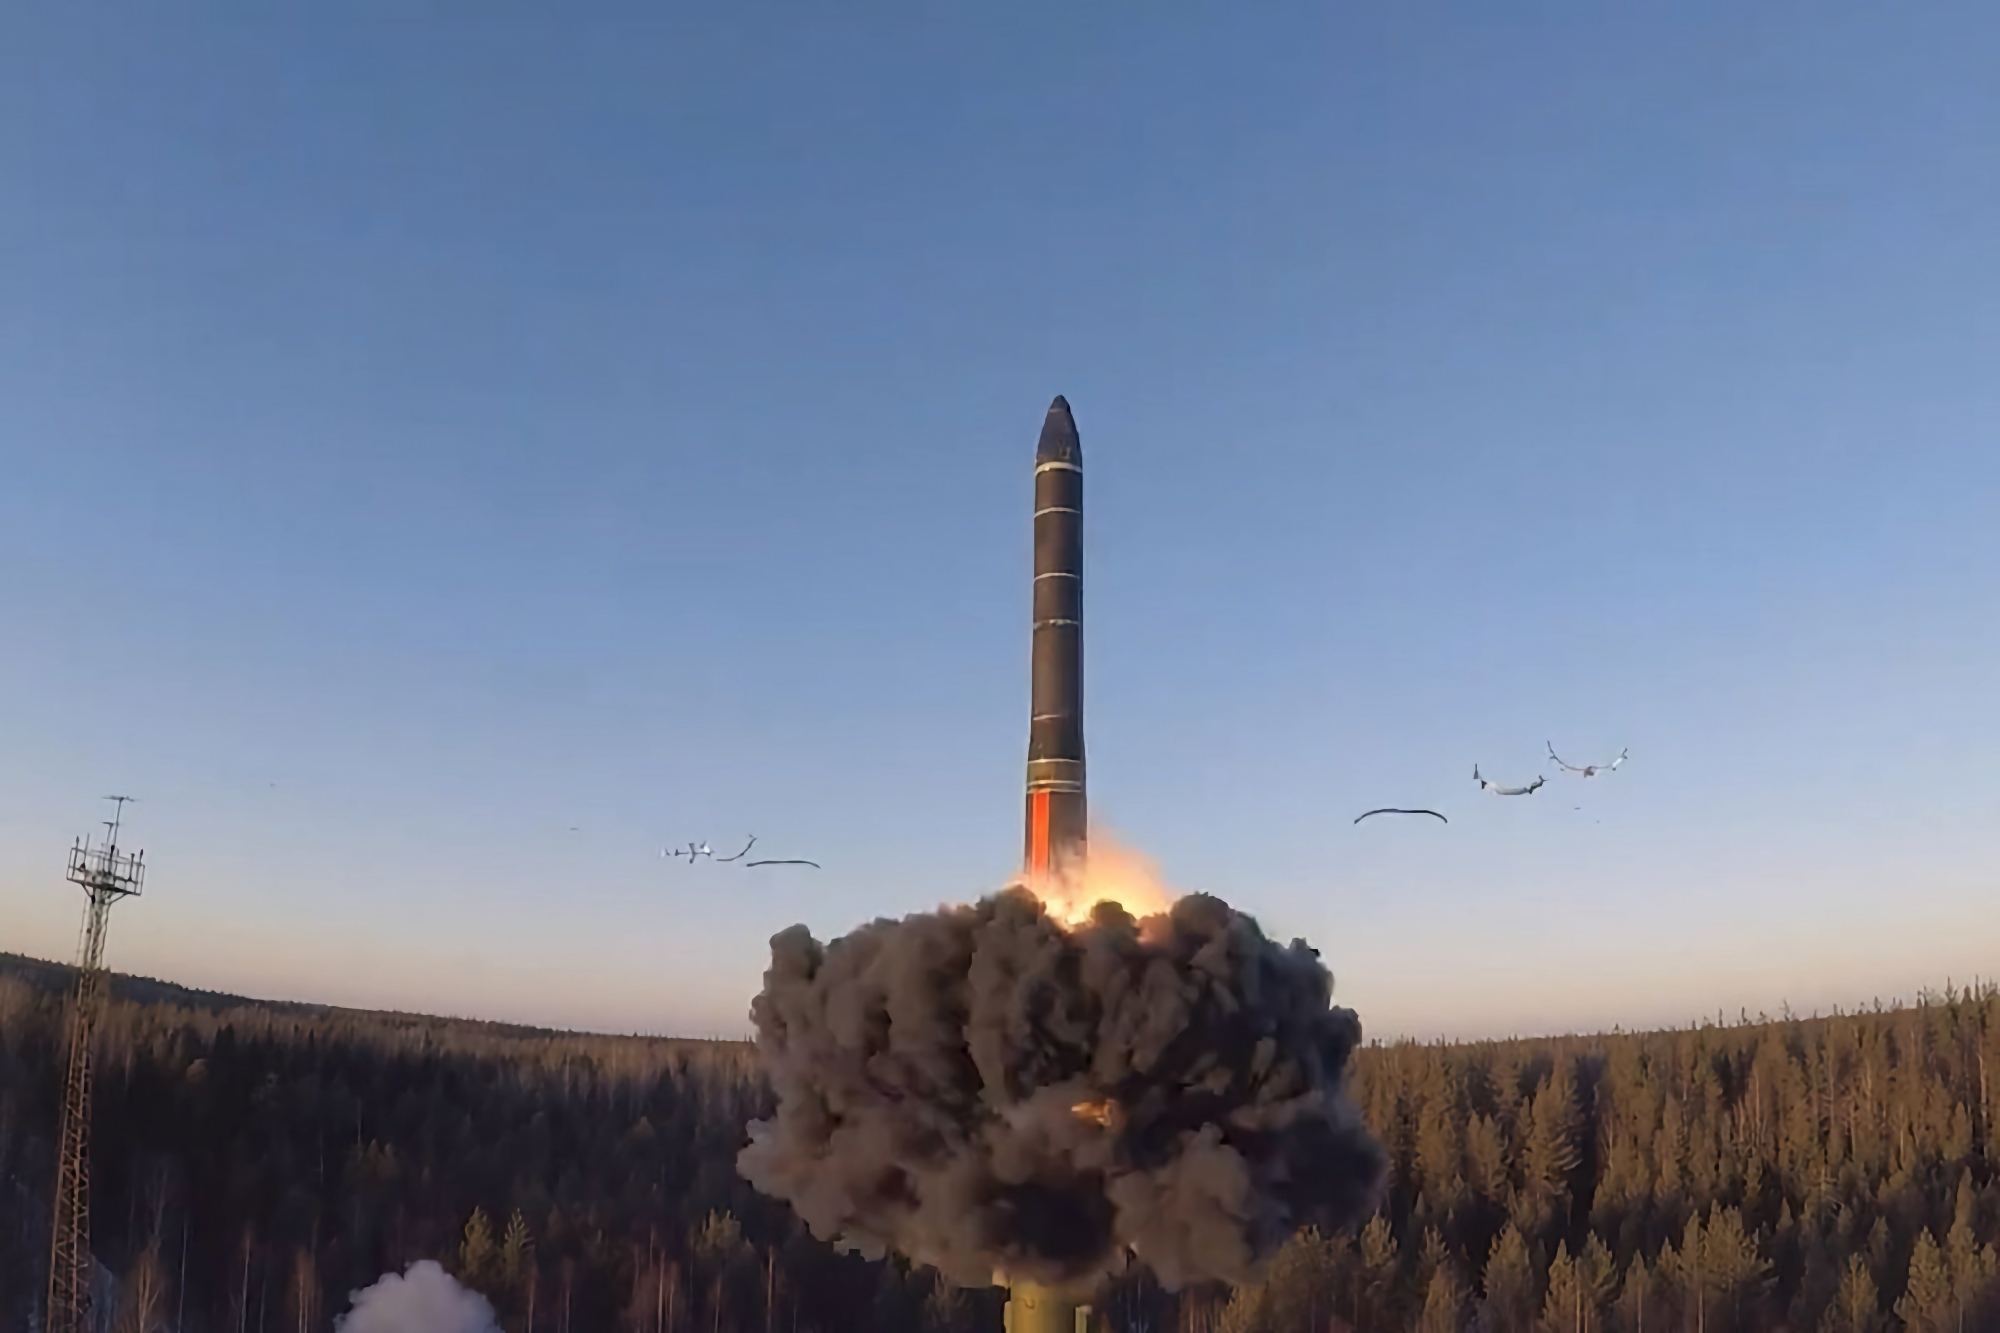 CNN: During Biden's visit to Ukraine, Russia tried to test a Sarmat ballistic missile but failed